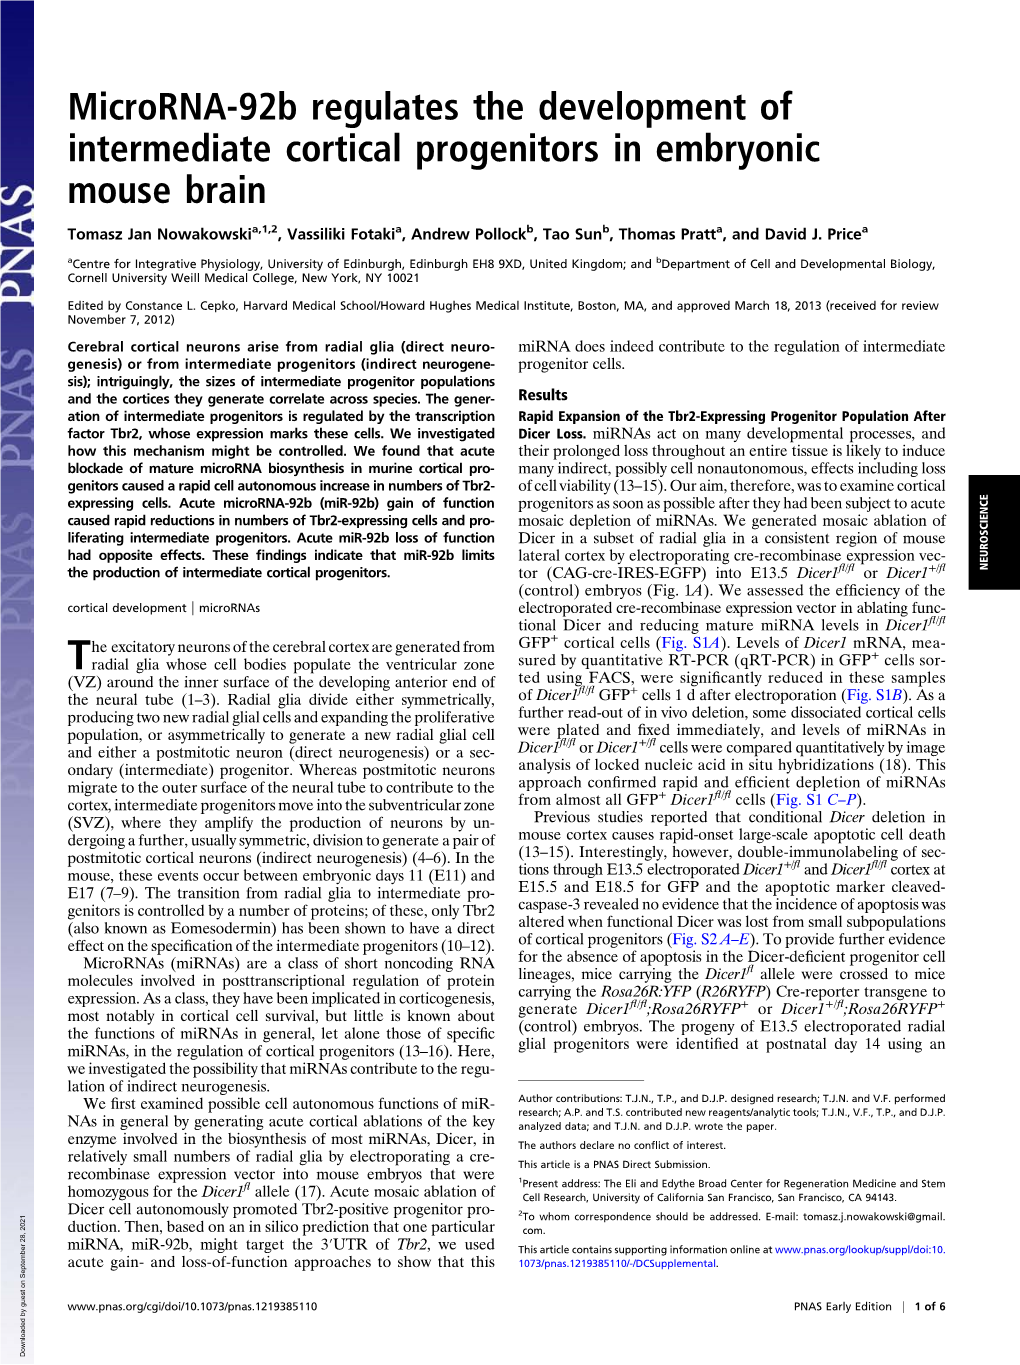 Microrna-92B Regulates the Development of Intermediate Cortical Progenitors in Embryonic Mouse Brain